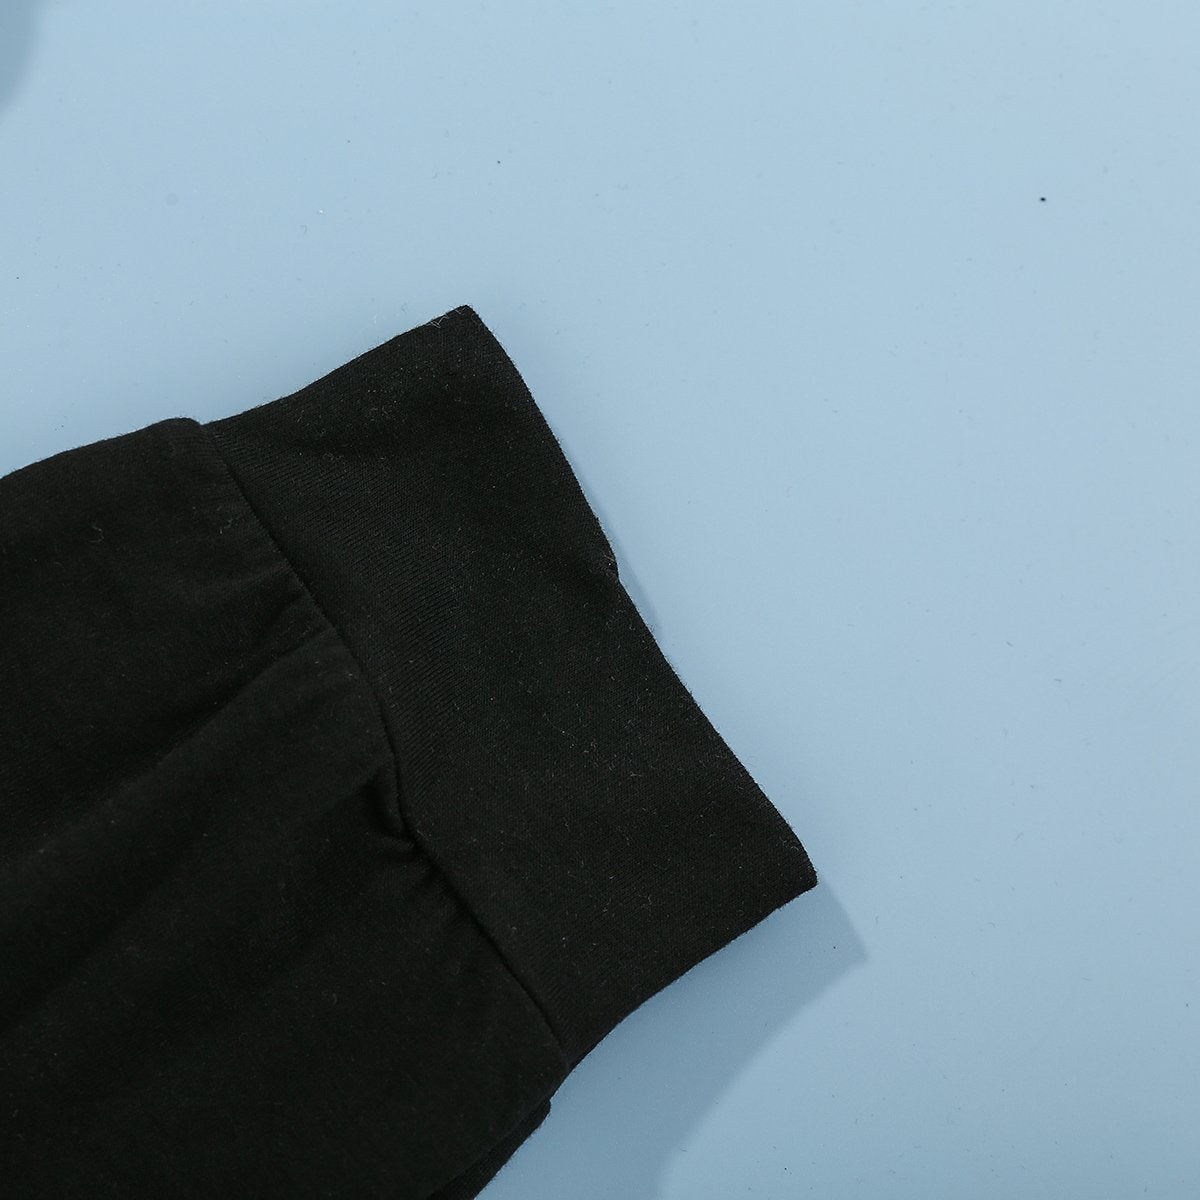 Boys Cat Printed Short Sleeve Top & Pants children wholesale clothing